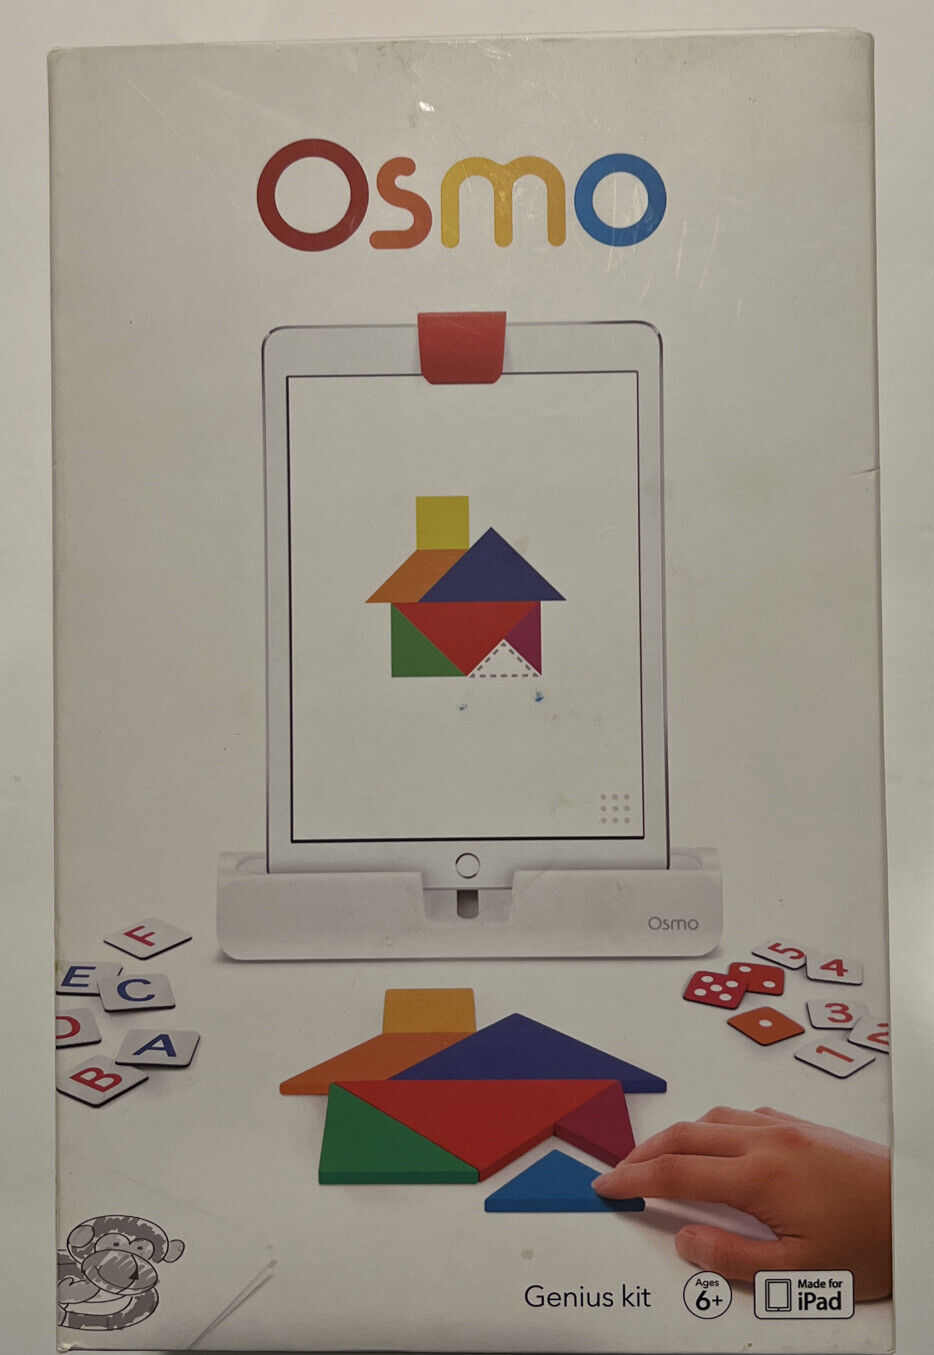 VGC Osmo Genius Kit For iPad - Tangram Numbers Words Drawing Base